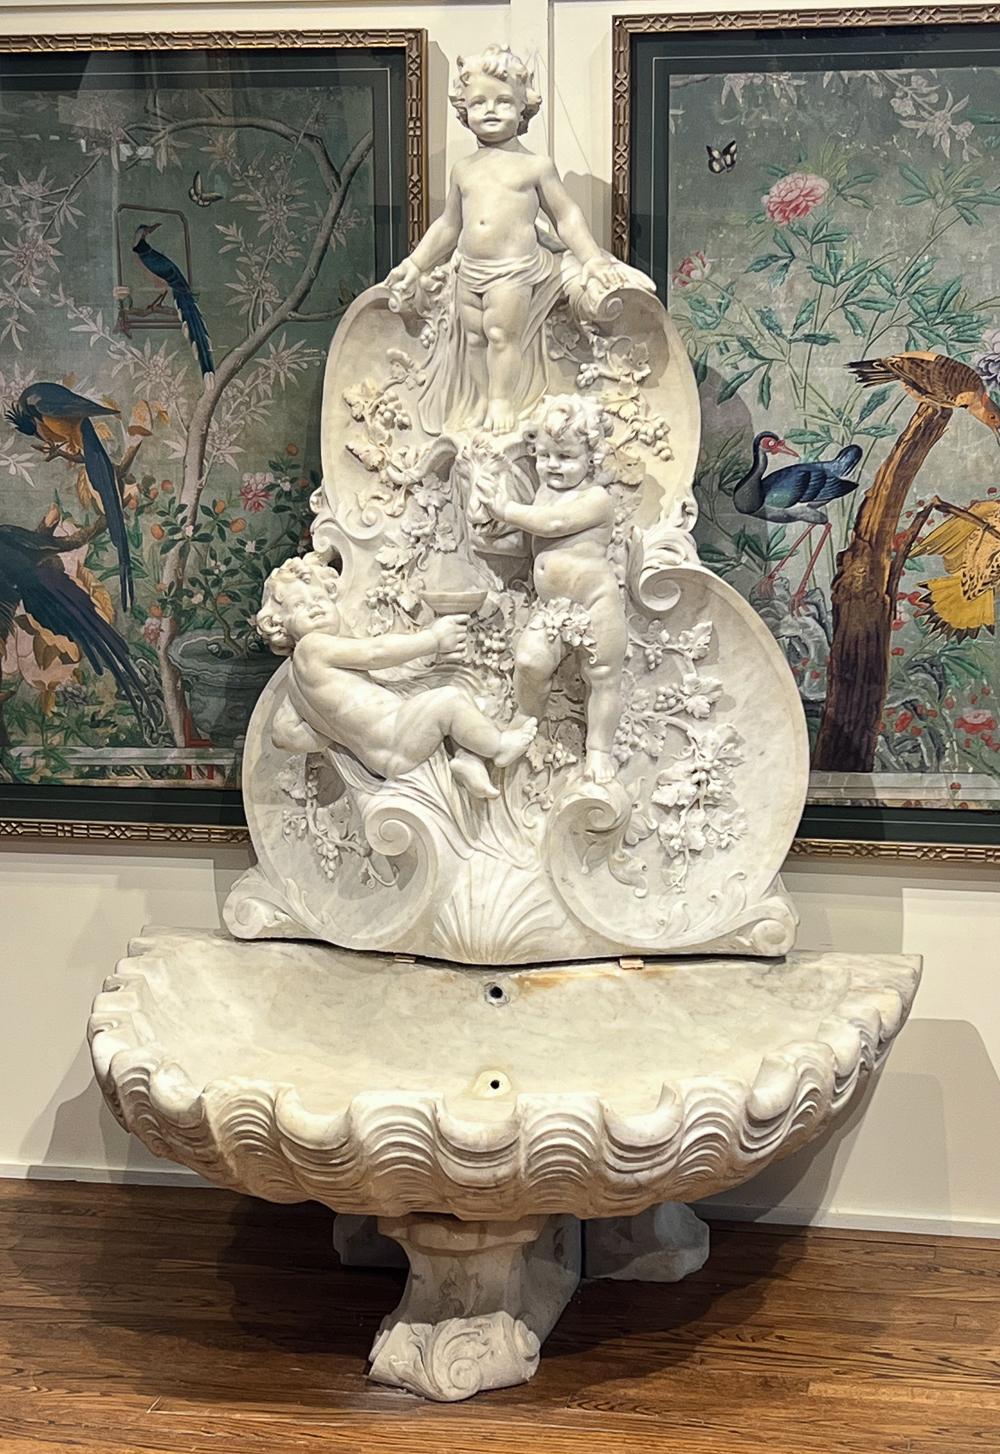 Late 19th-century Italian Carrara marble wall fountain, est. $100-$50,000